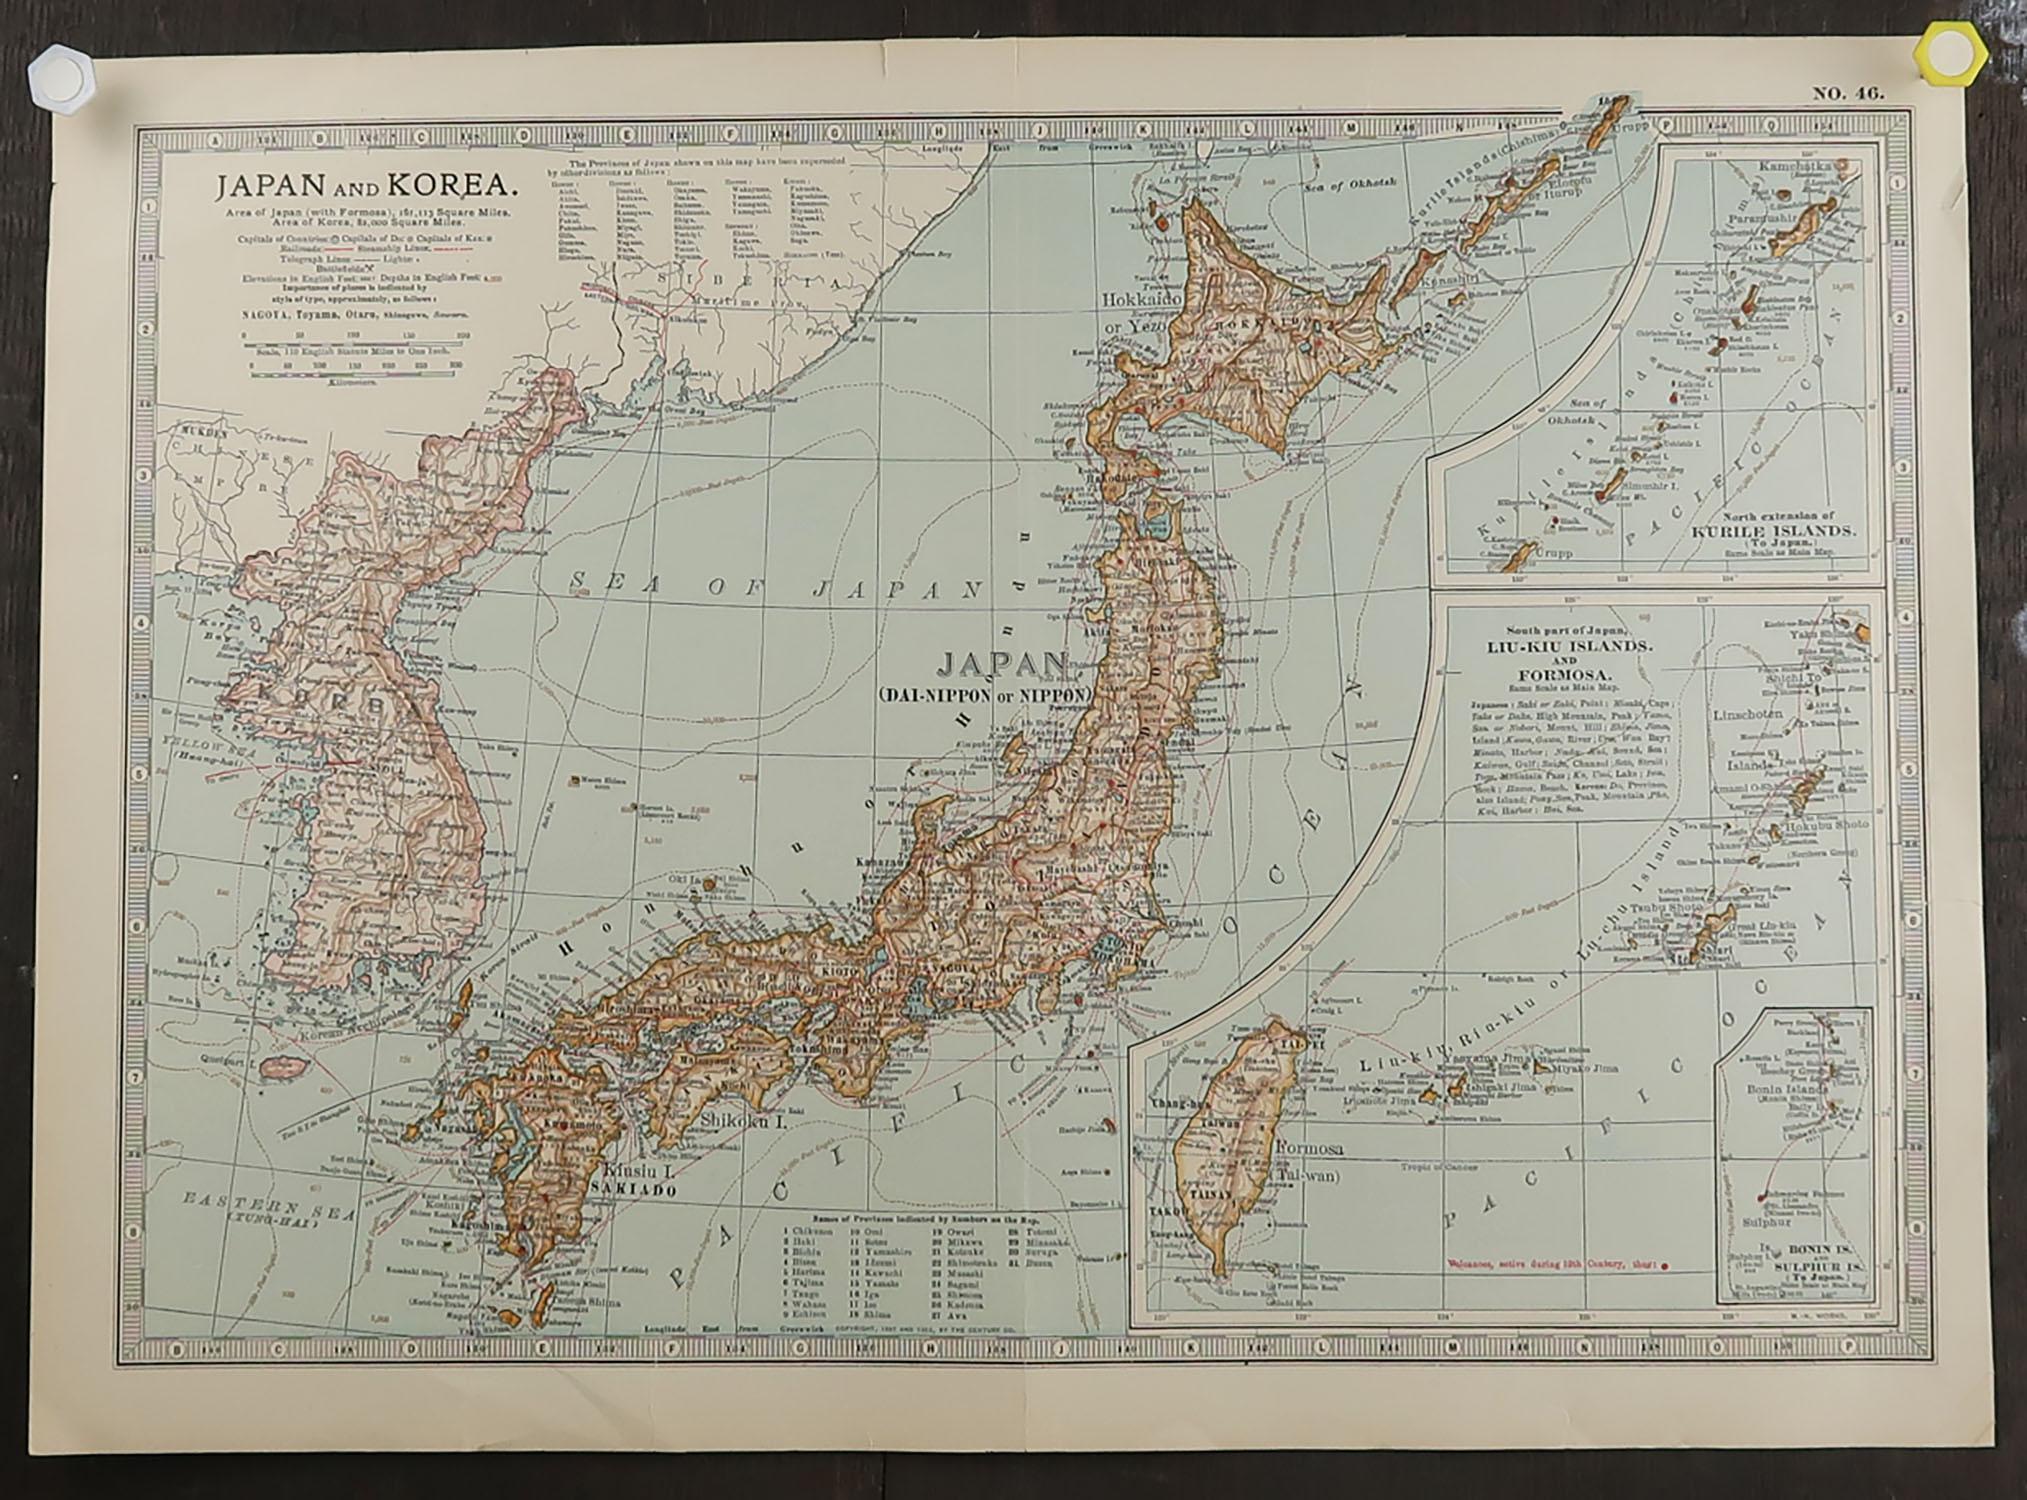 Other Original Antique Map of Japan, circa 1890